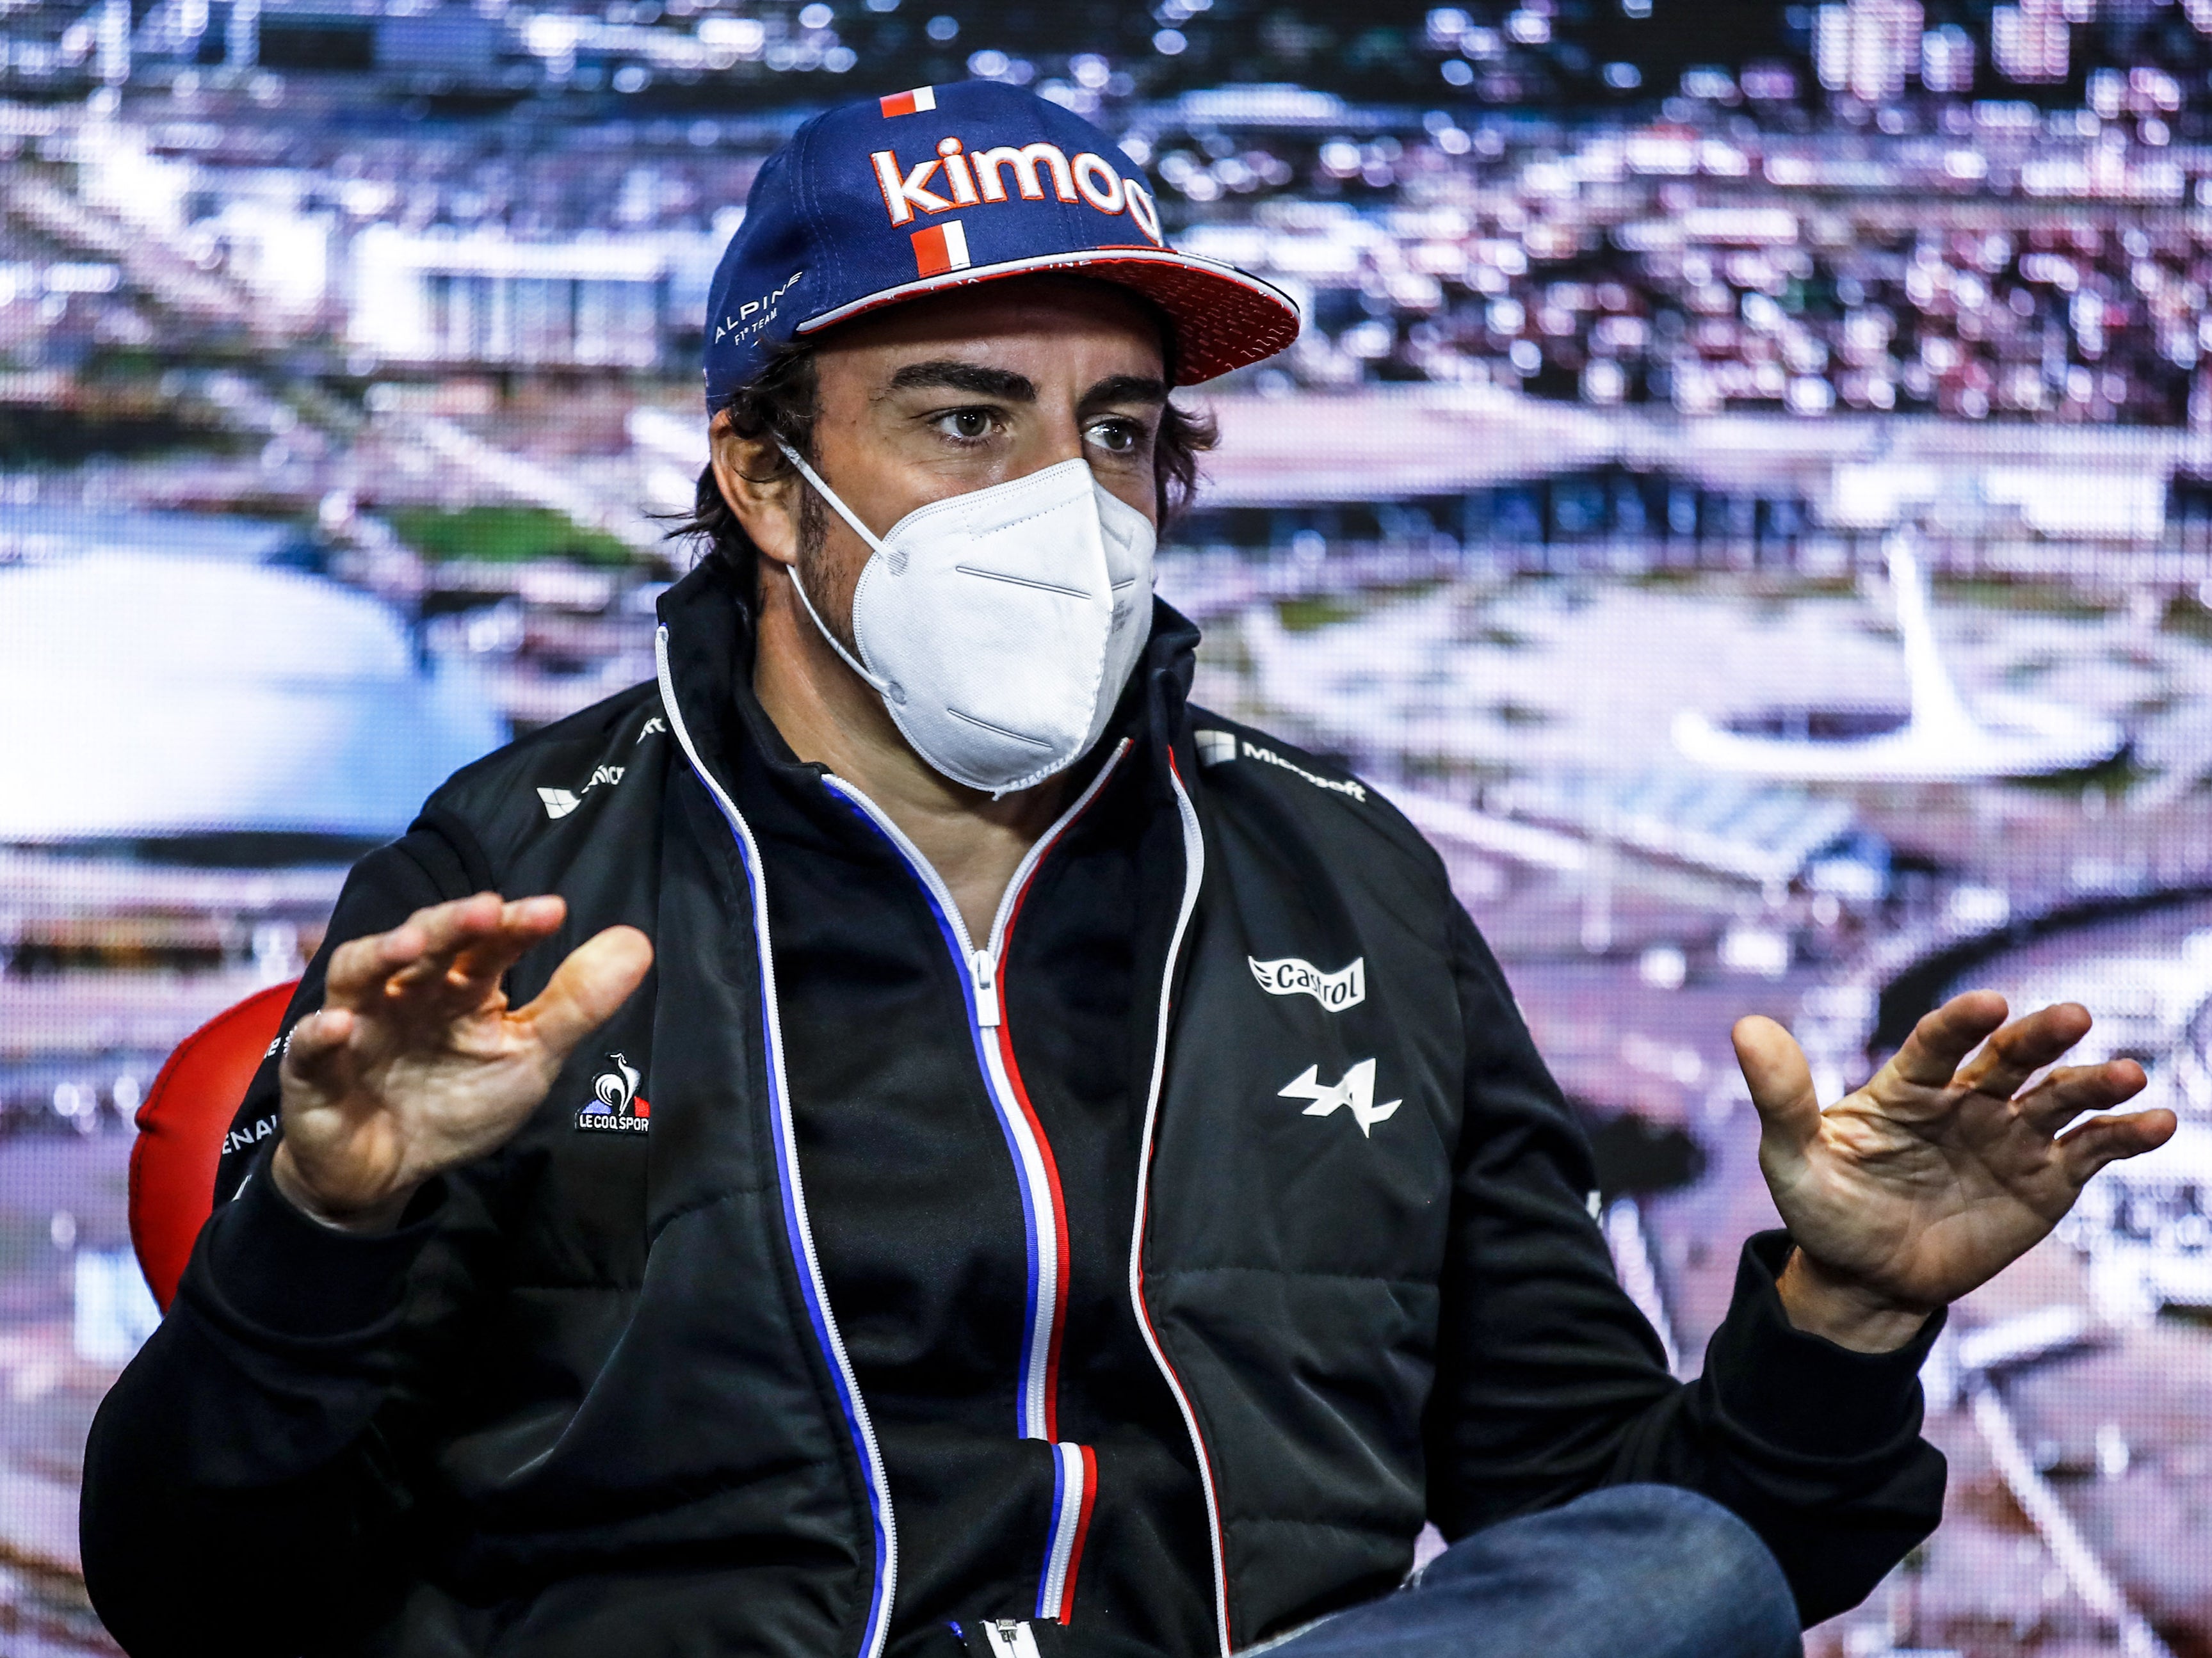 Alpine driver Fernando Alonso